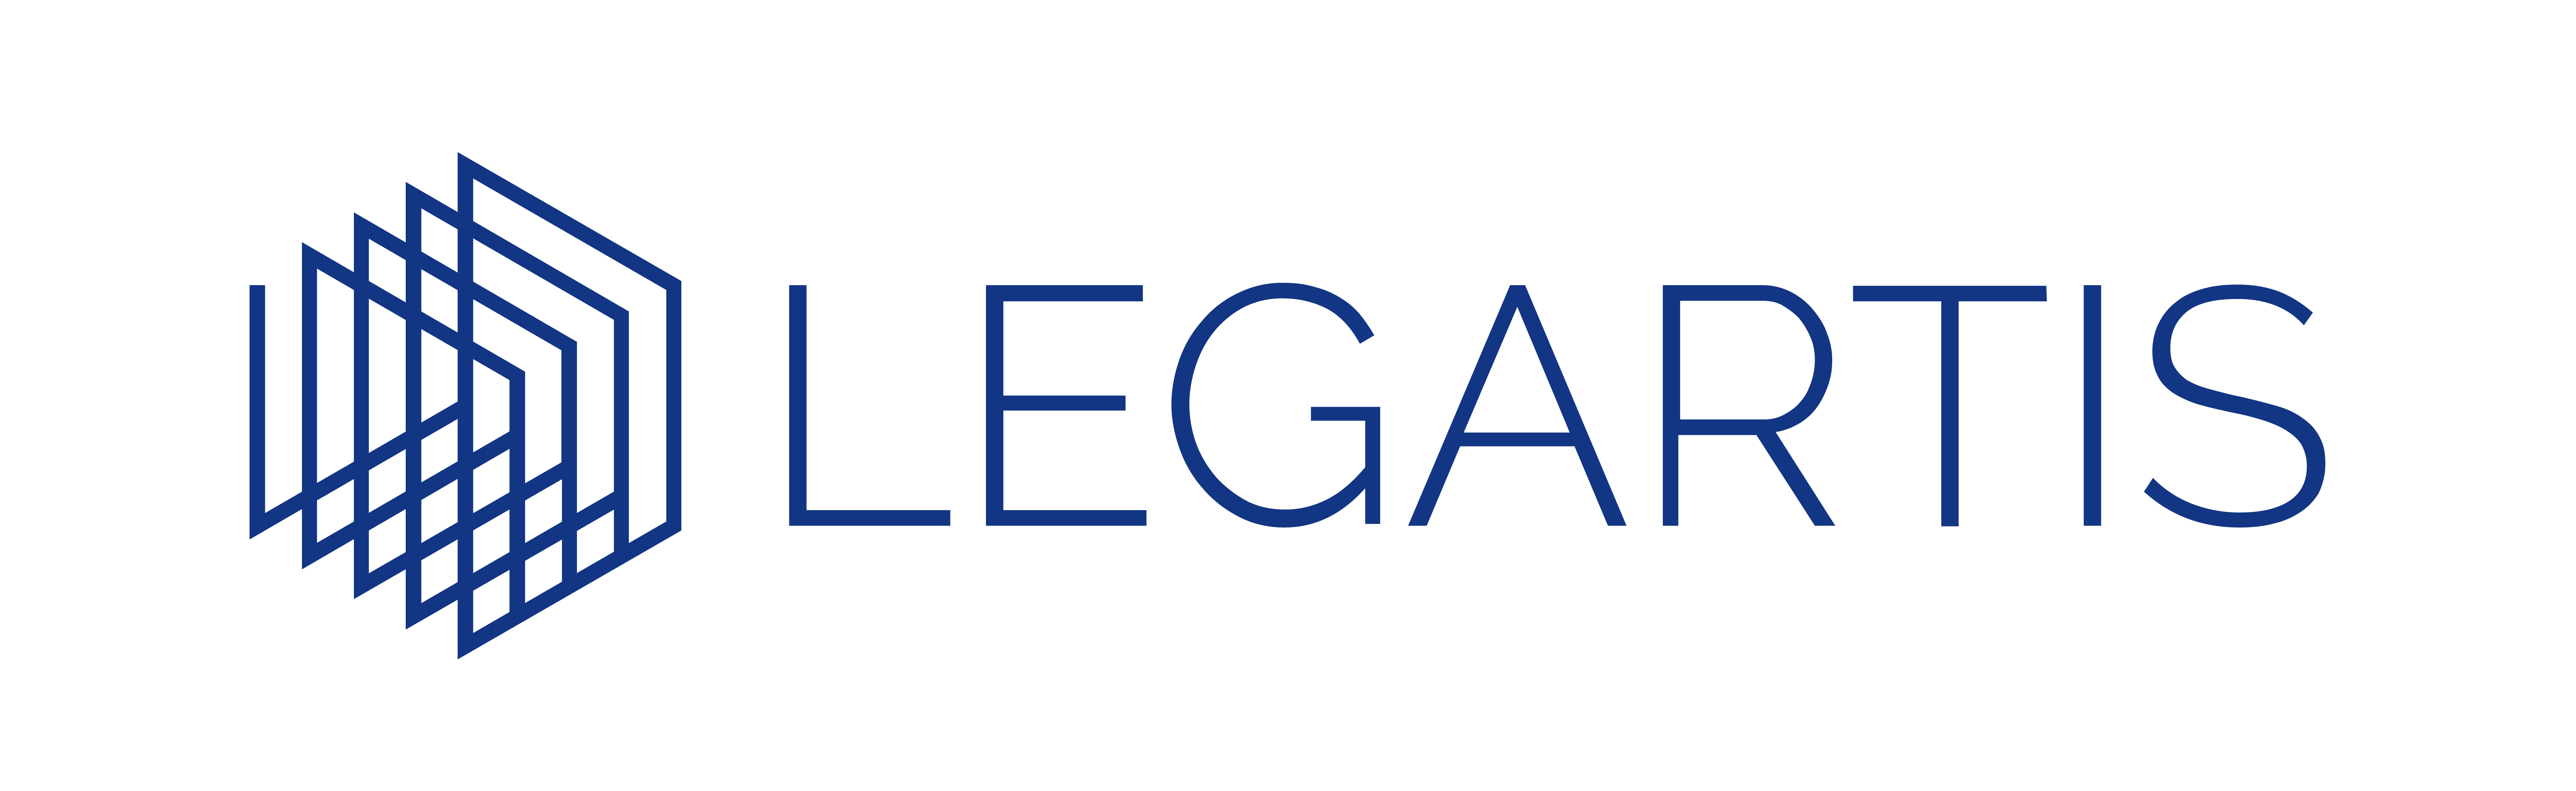 Legartis logo